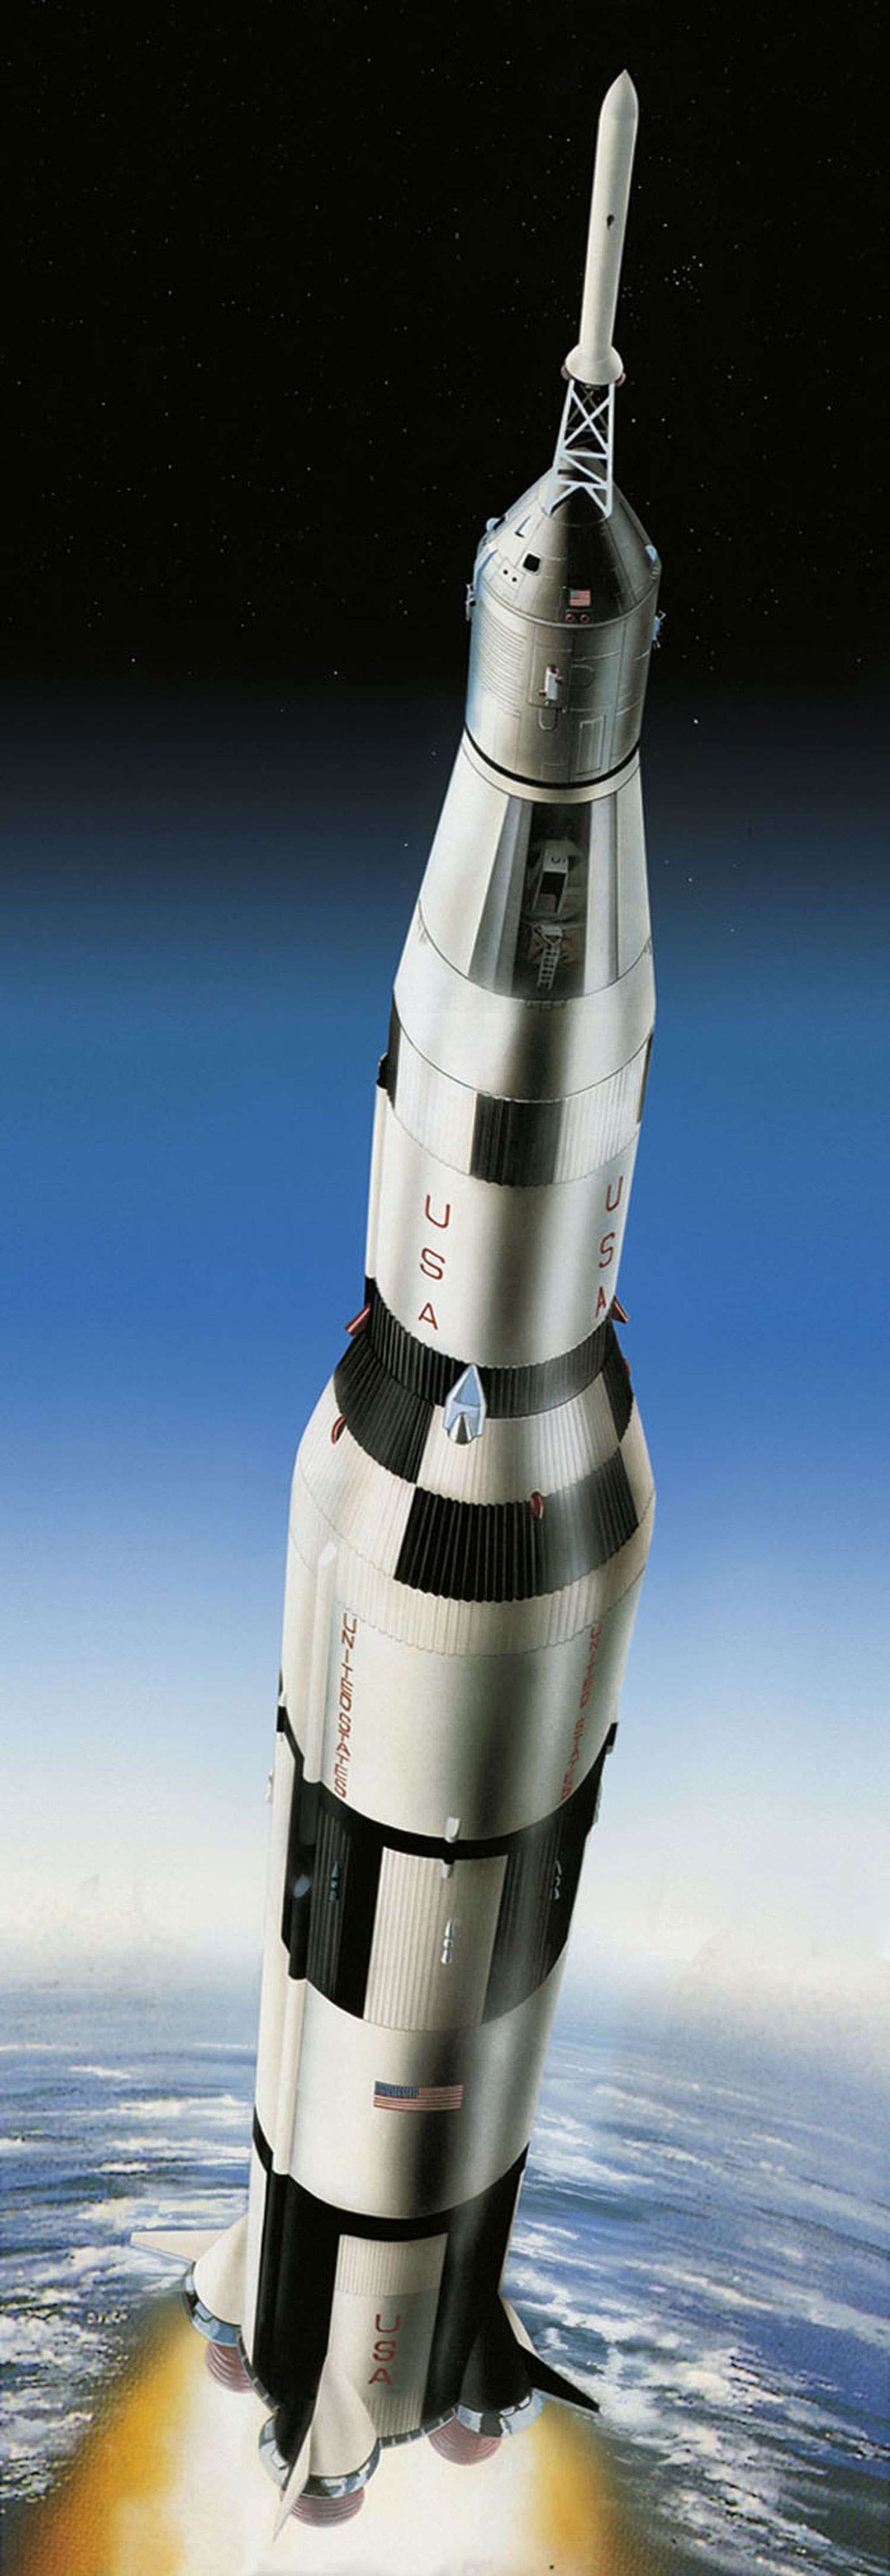 REVELL Apollo 11 Saturn V Mehrfarbig Rakete Bausatz